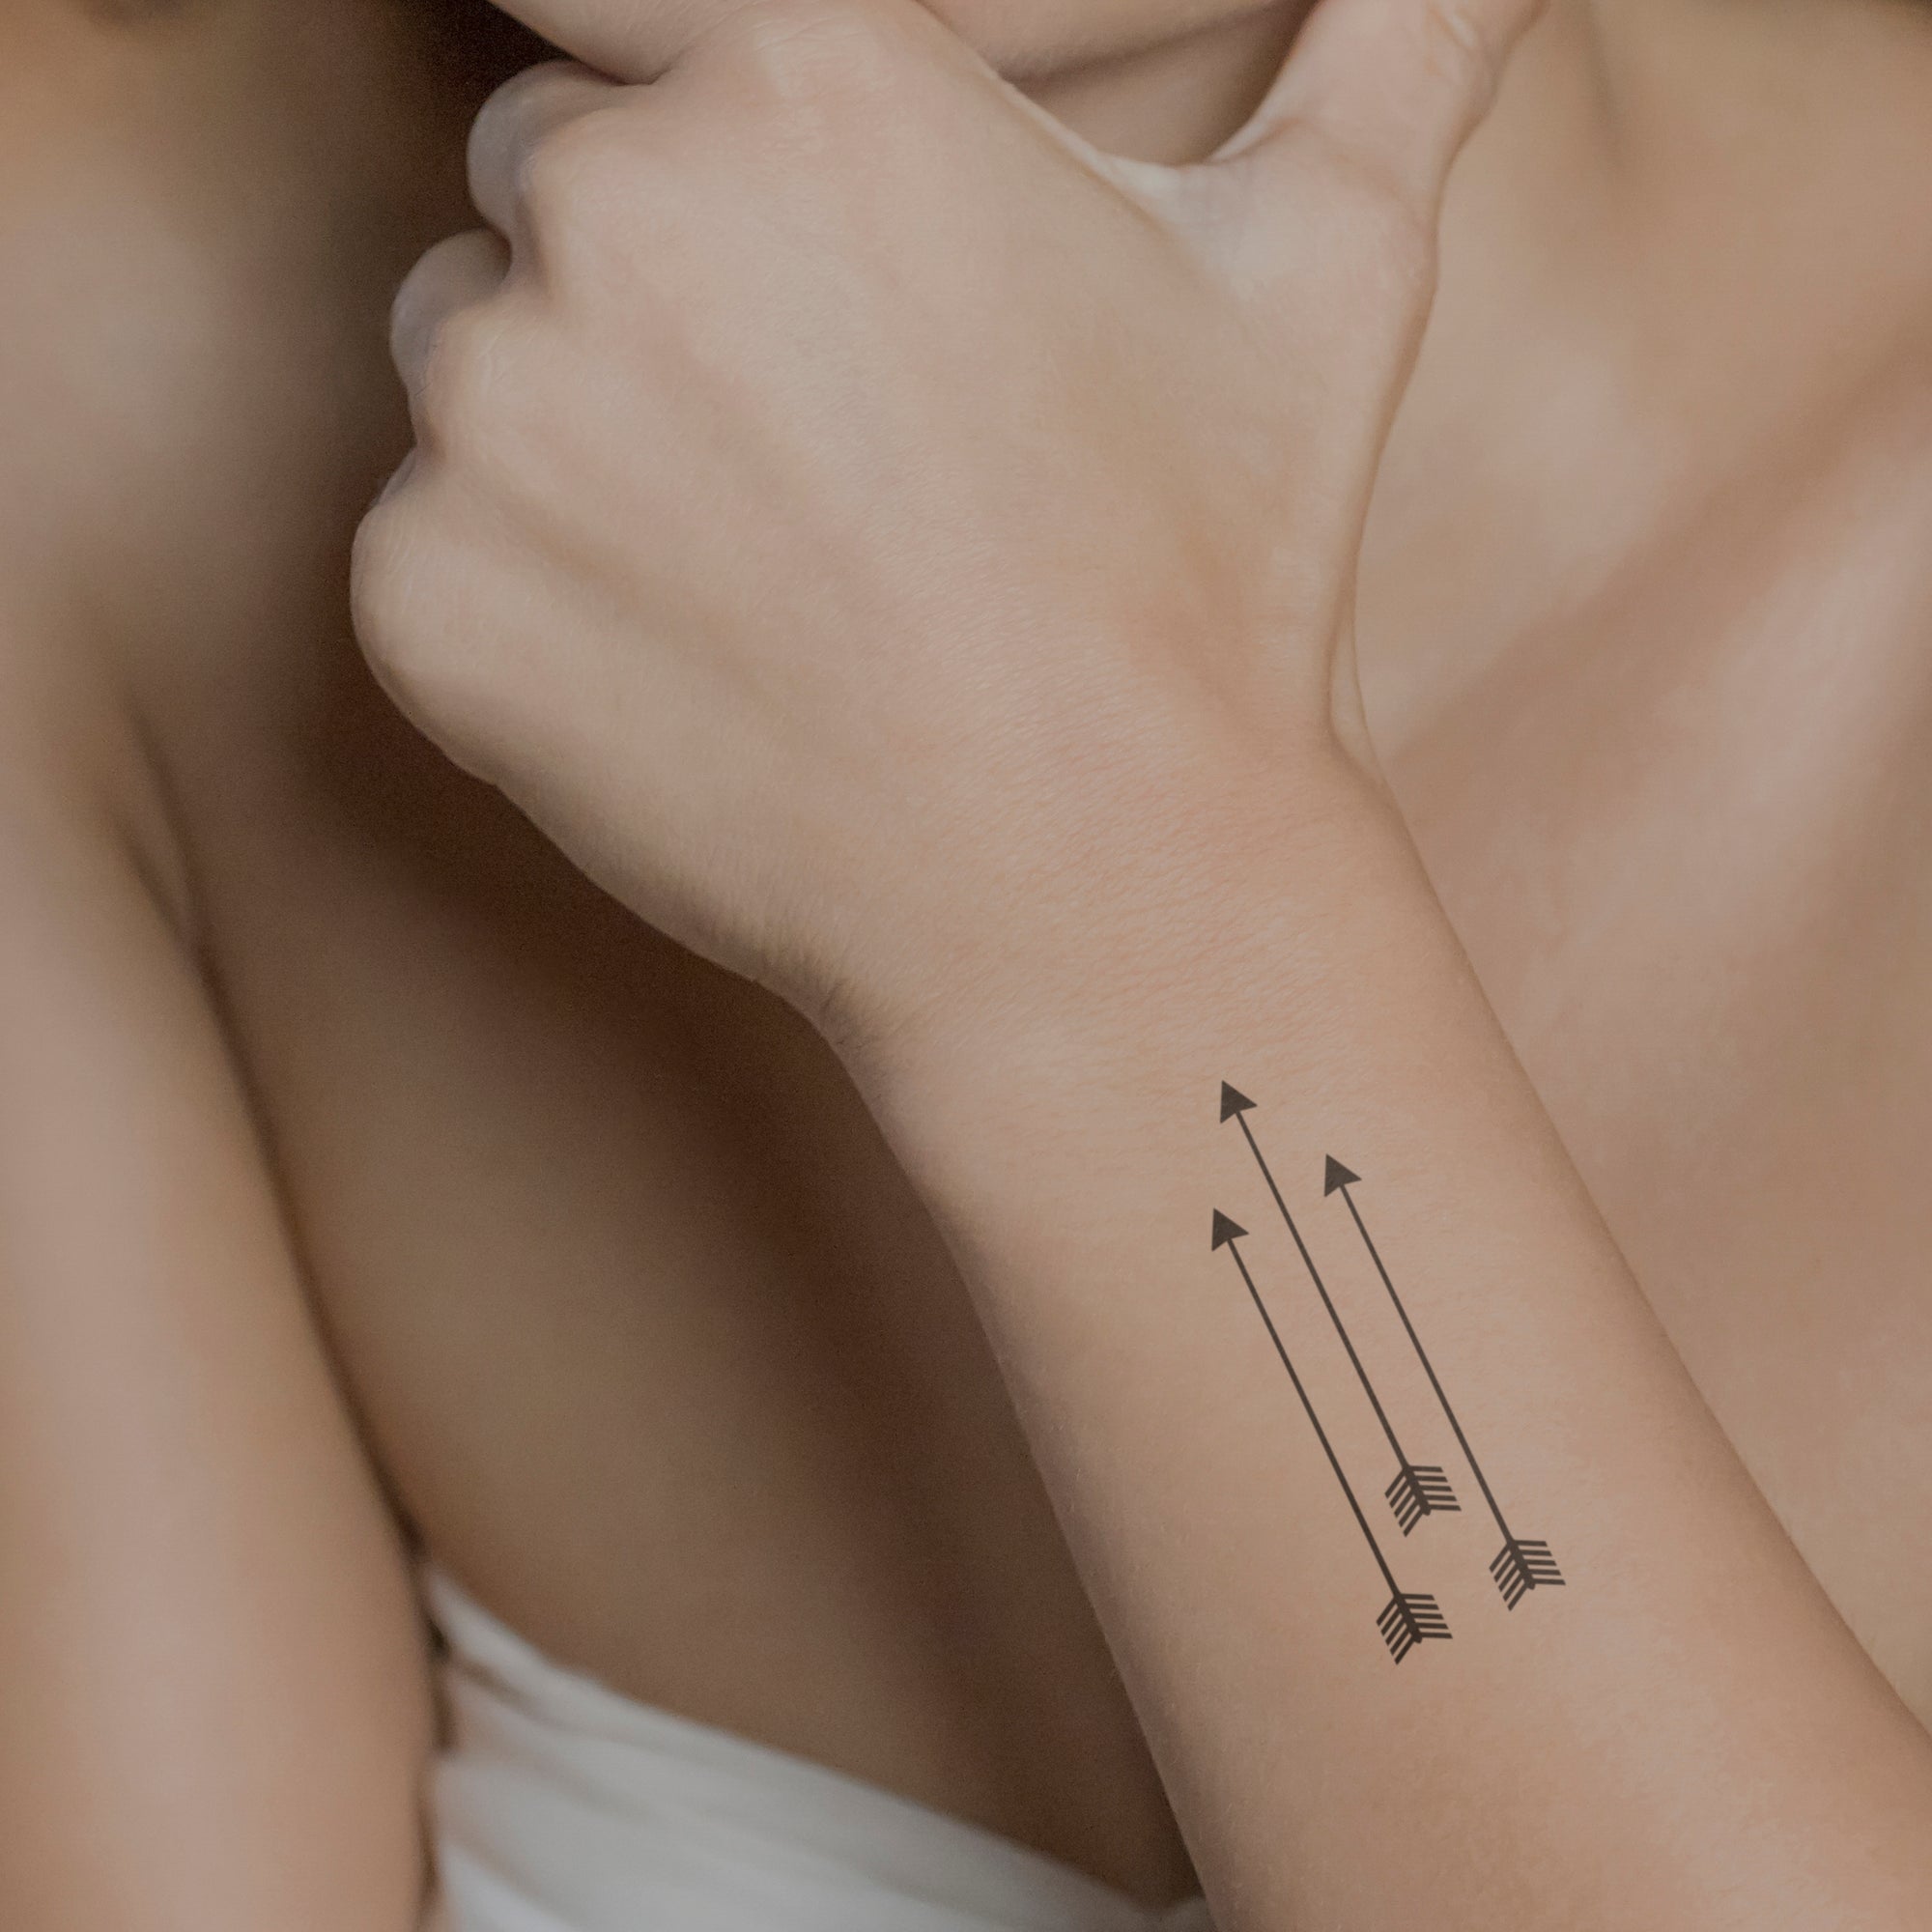 Bow and Arrow Temporary Tattoo (Set of 3) – Small Tattoos